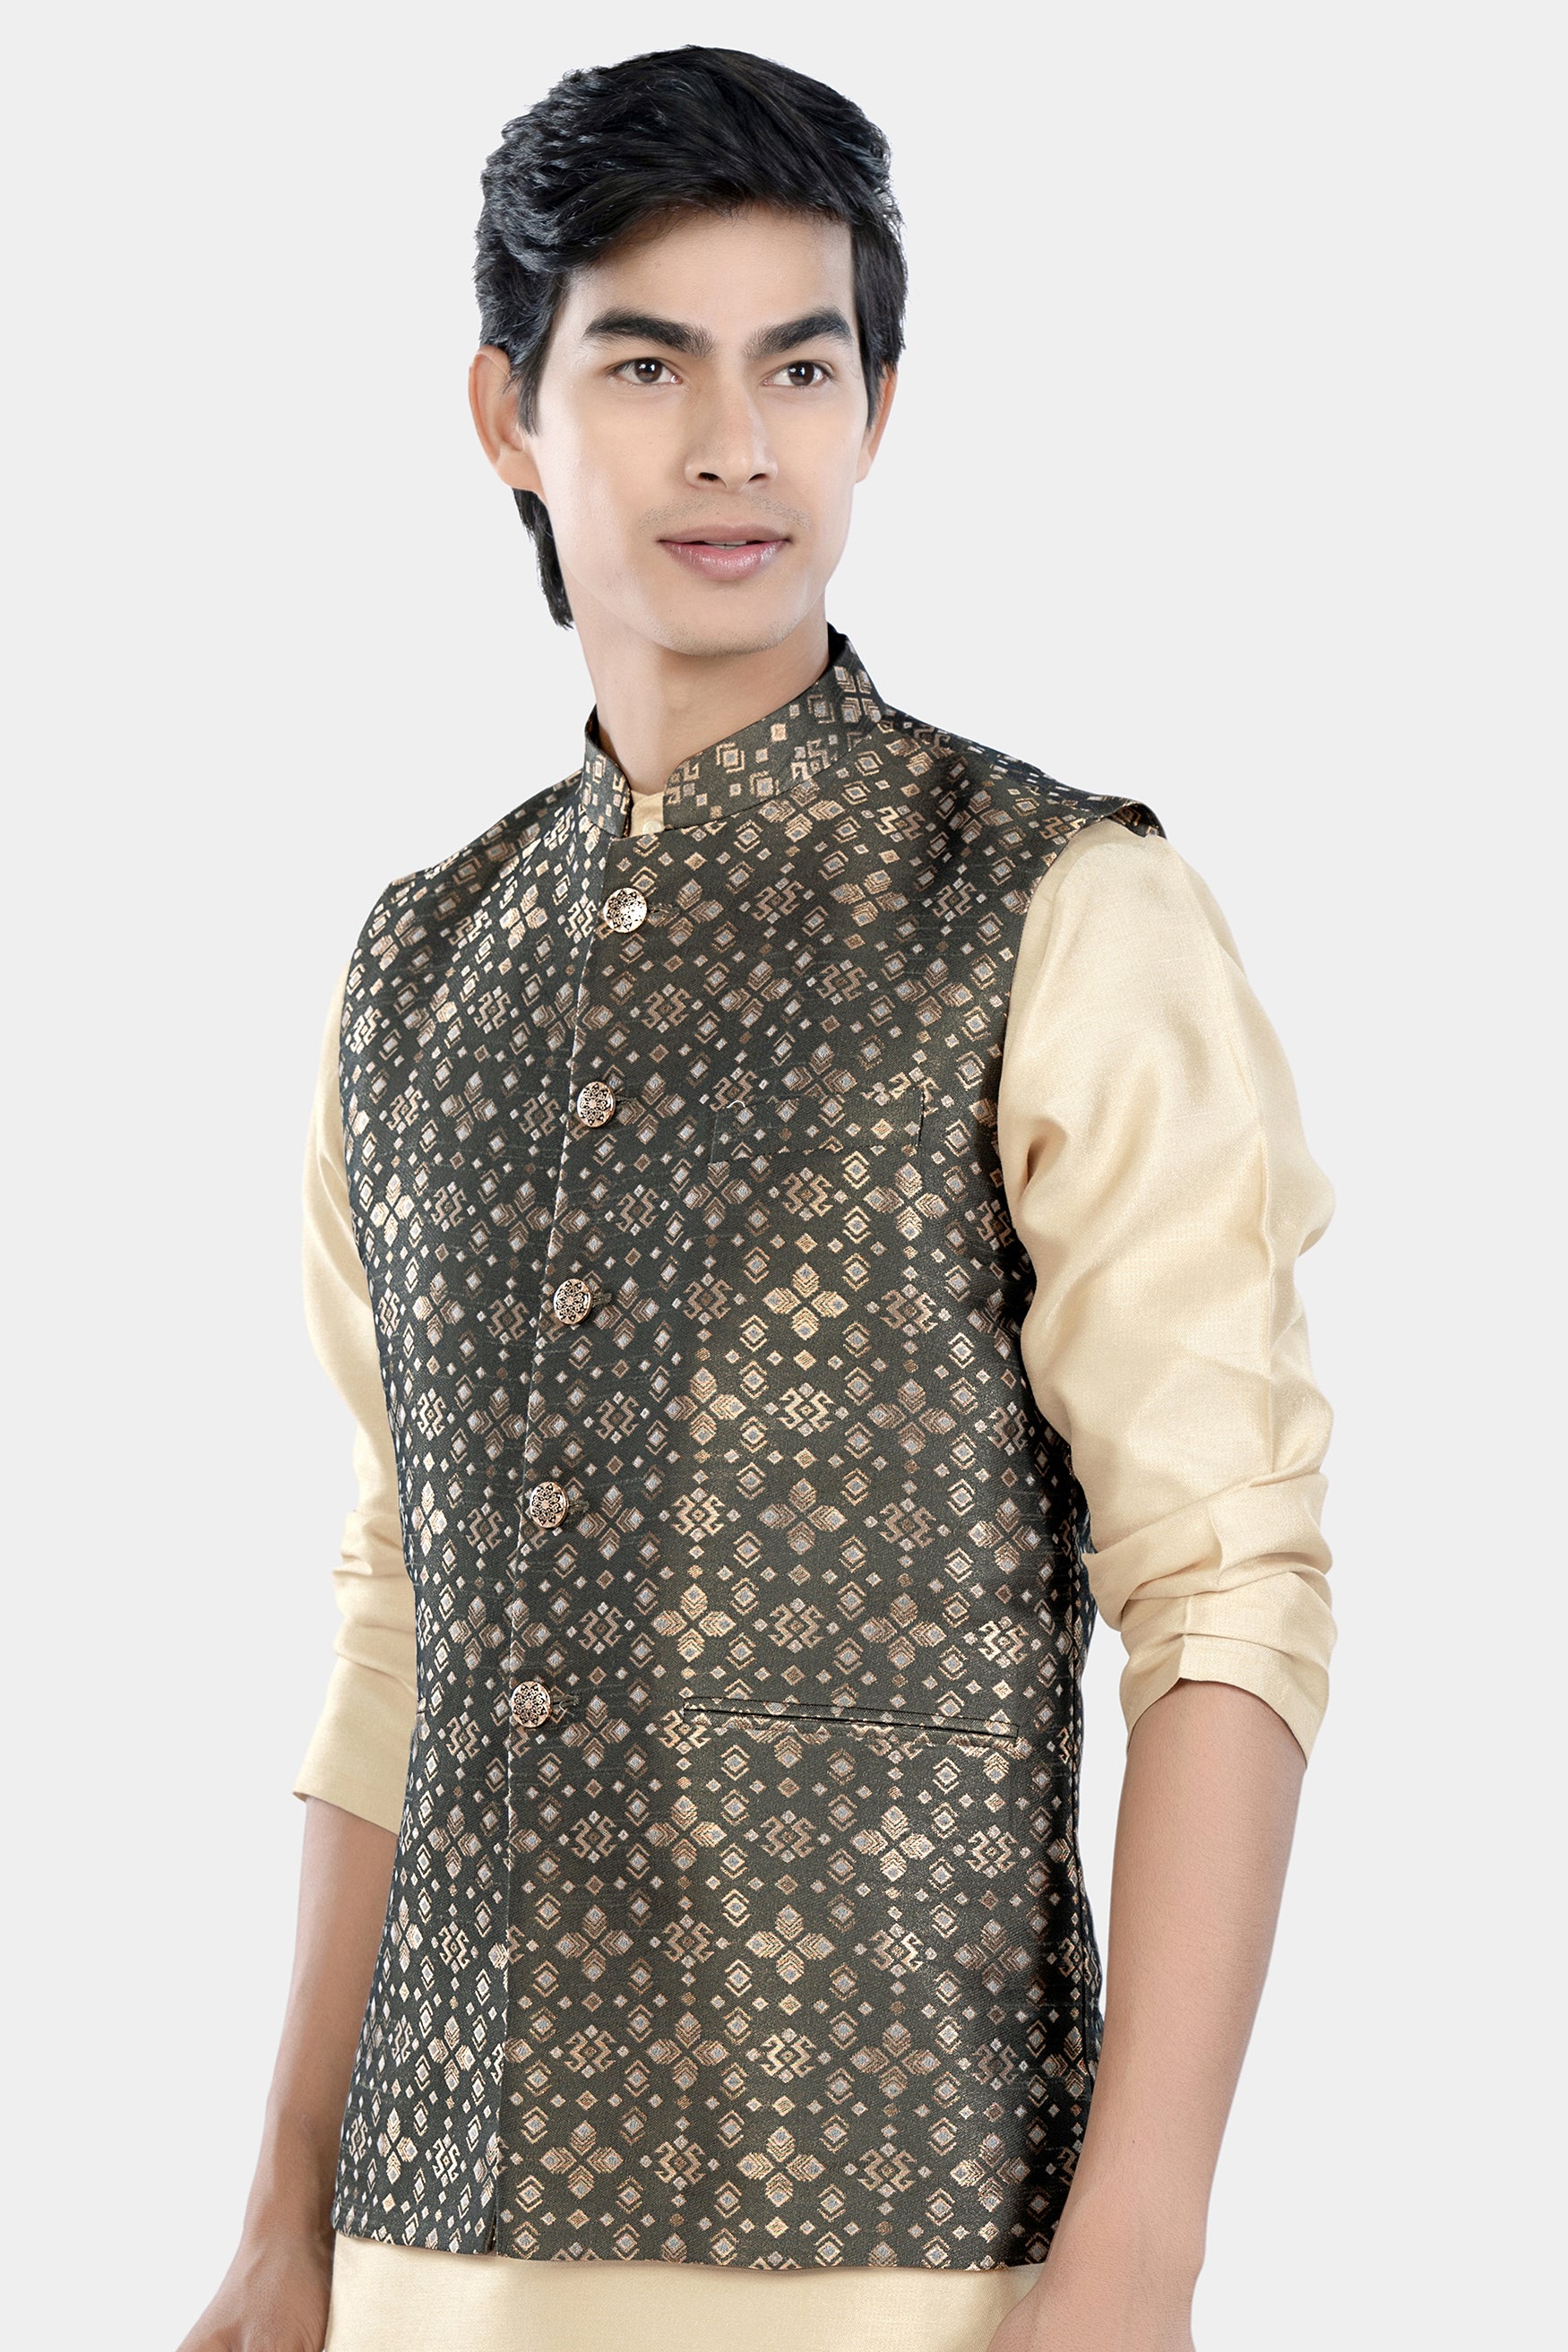 Fuscous Green and Mongoose Brown Floral Jacquard Textured Designer Nehru Jacket